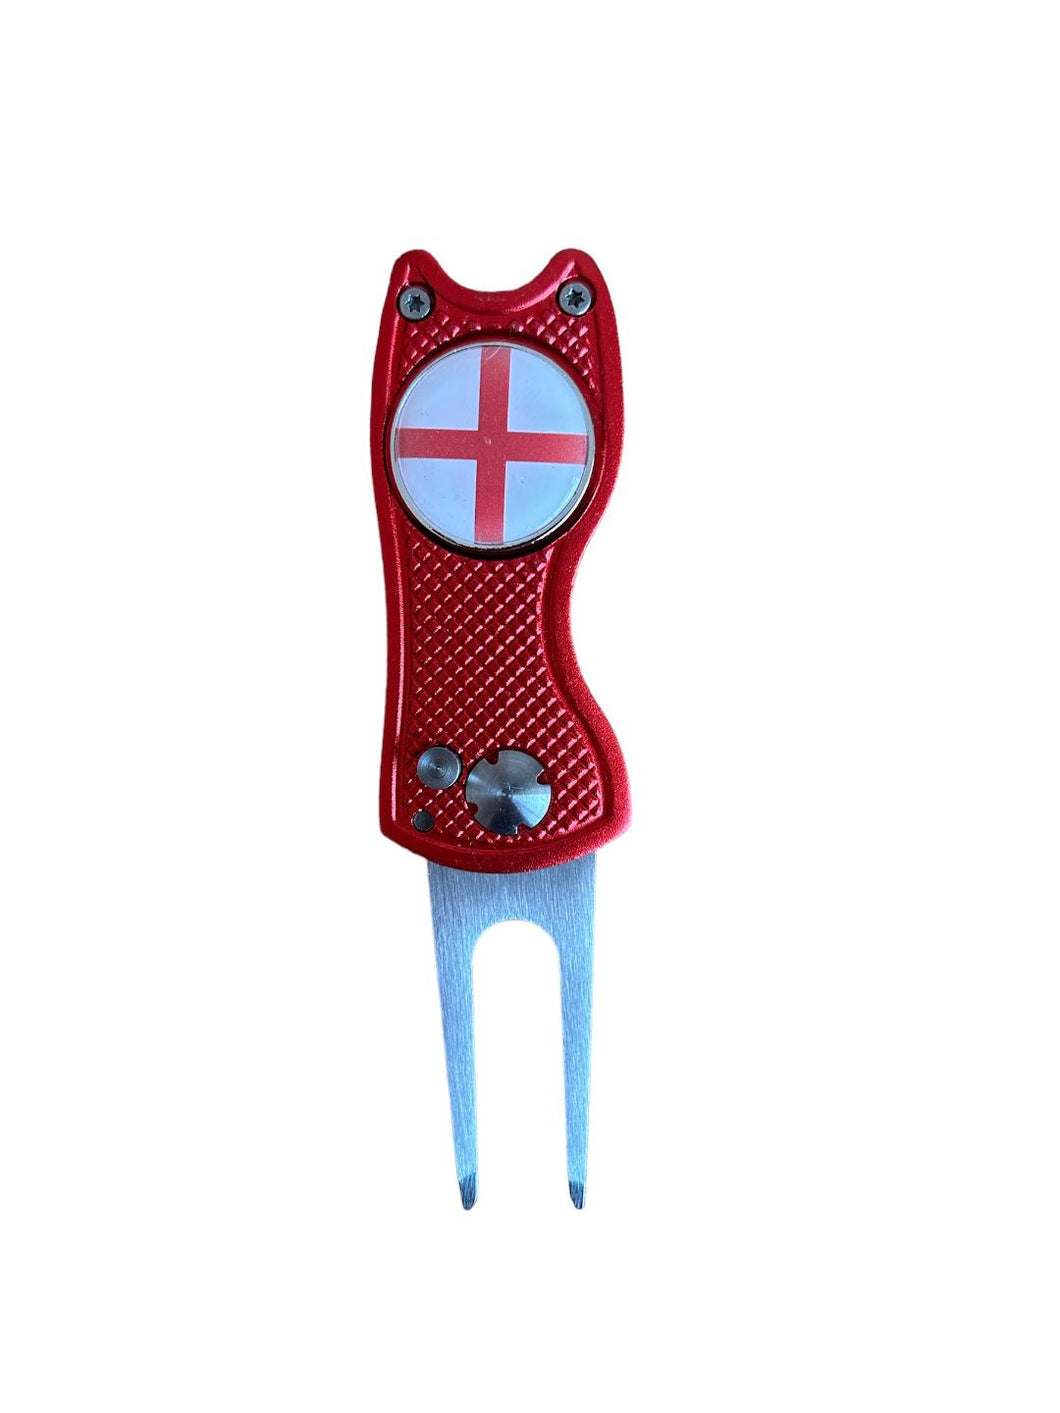 England Crested Switchblade Design Golf Divot Tool With Detachable Golf Ball Marker